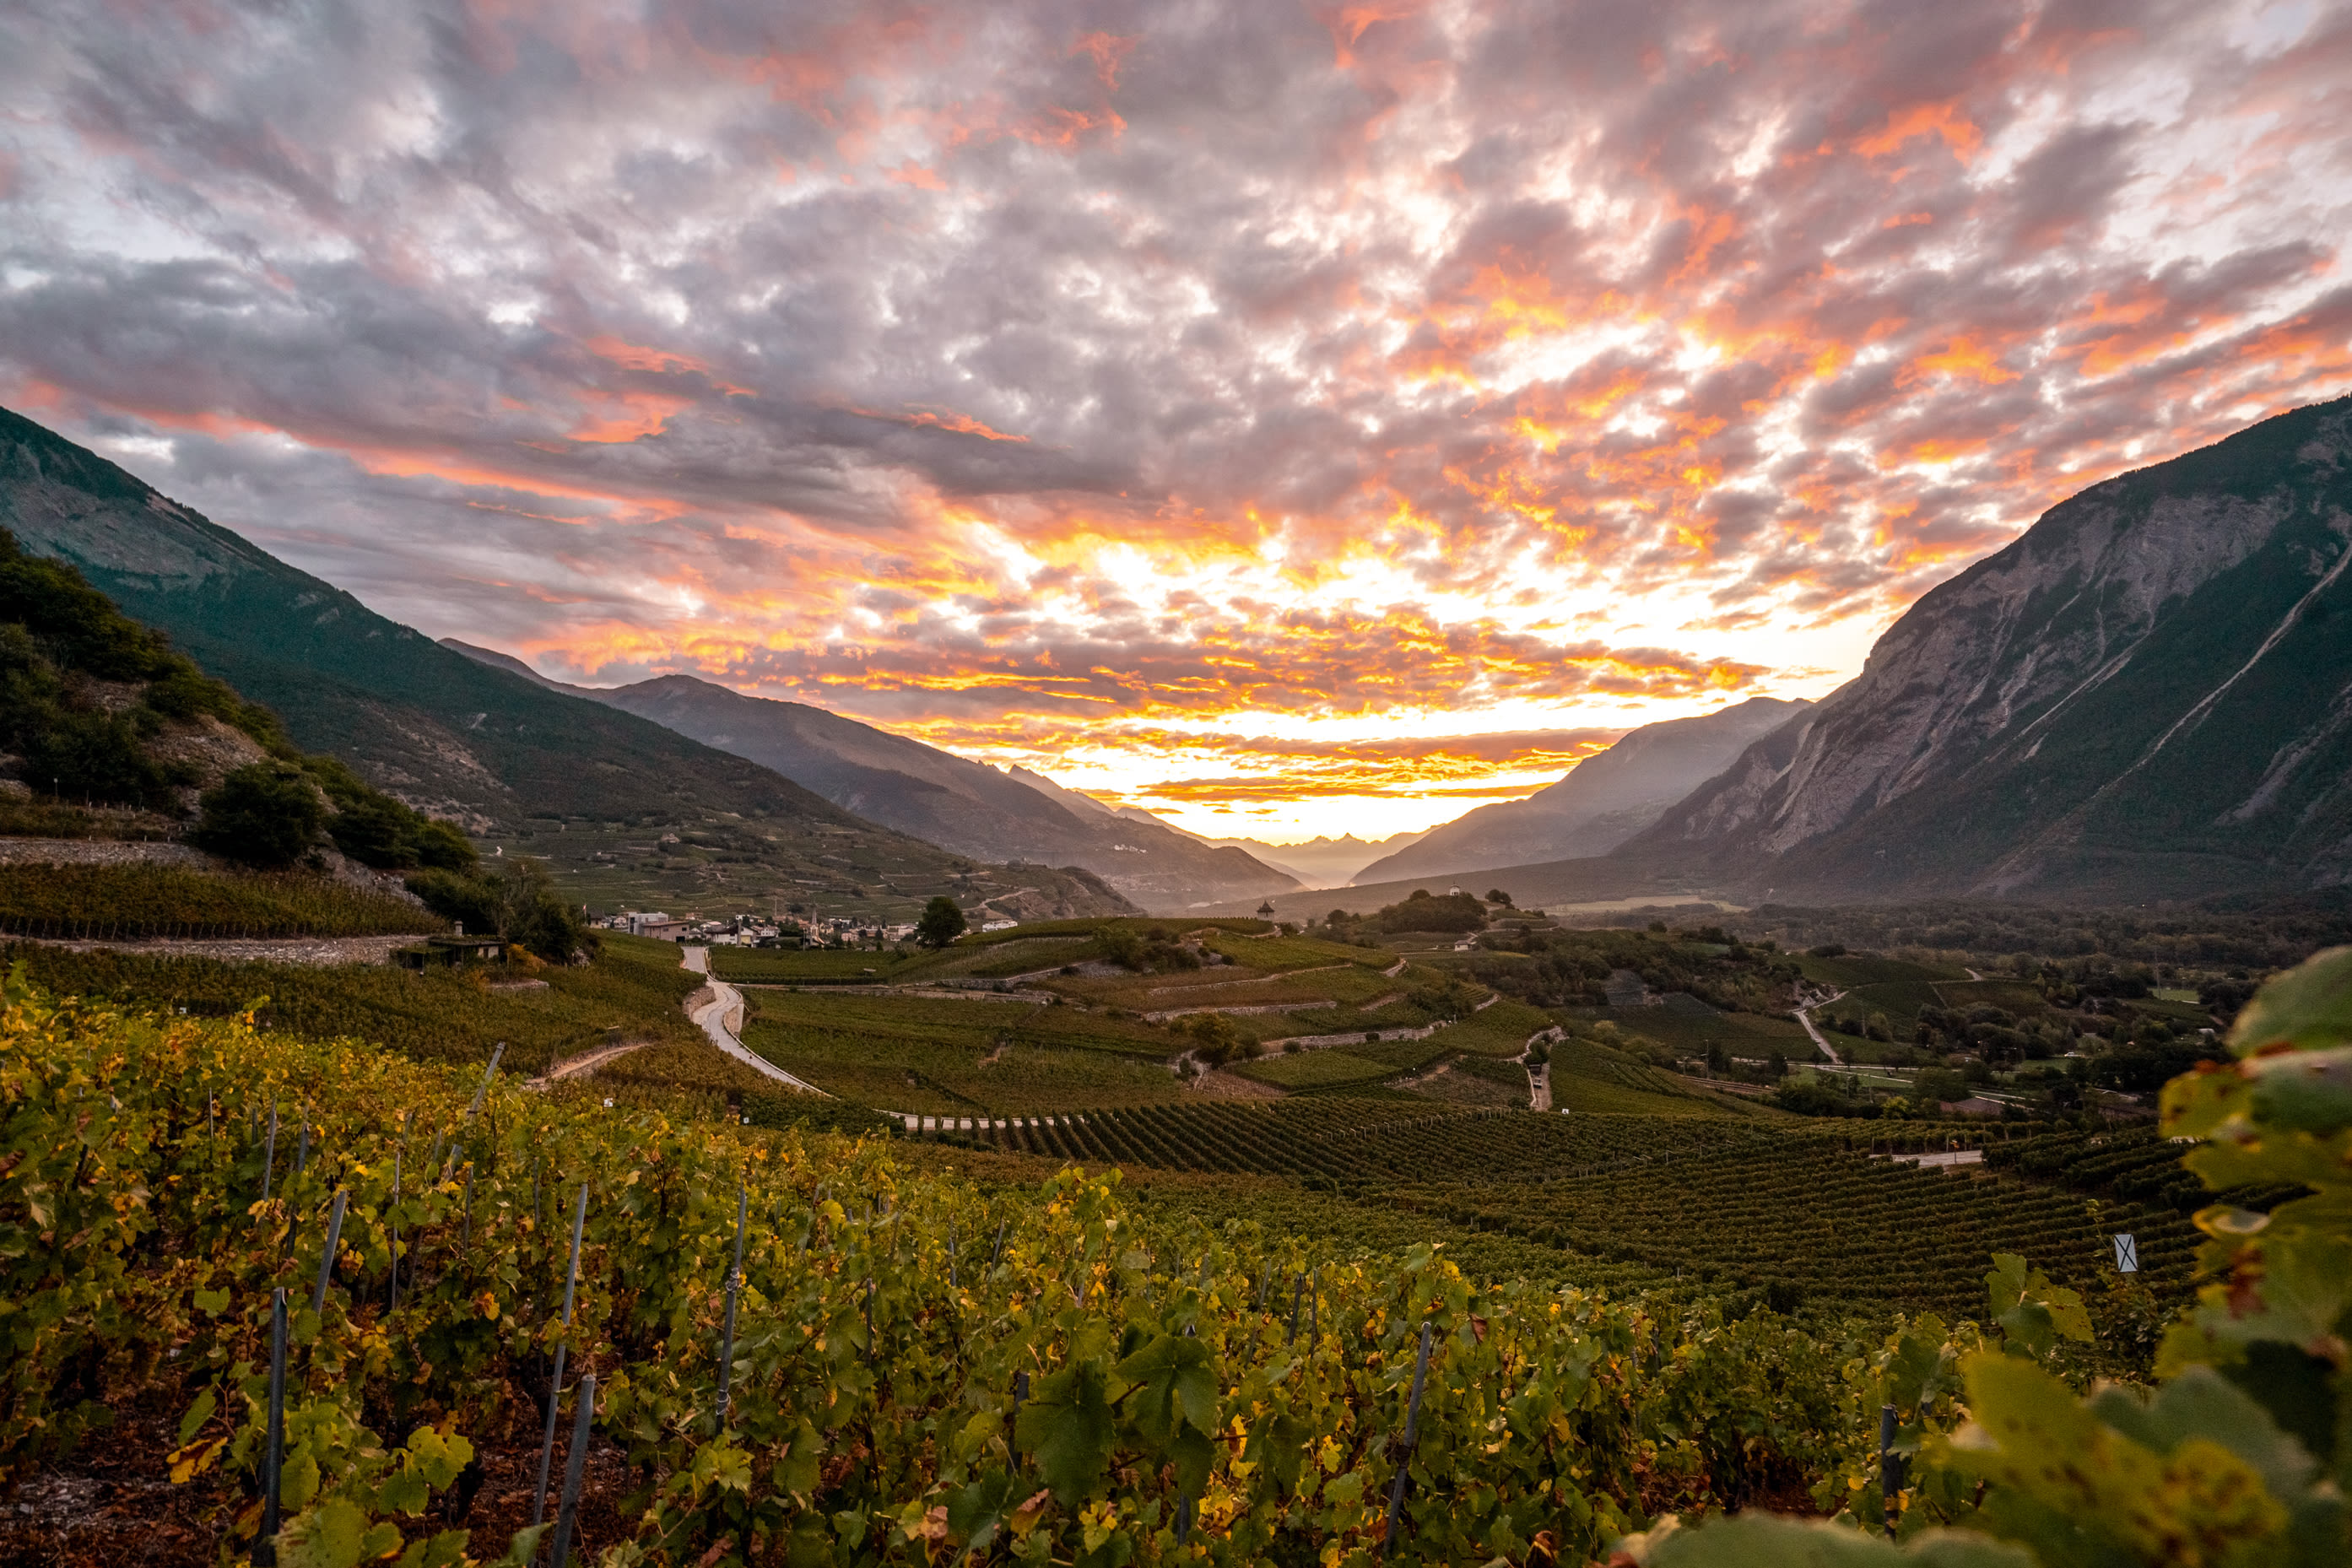 Weinpark der Schweiz Salgesch, Wallis, Schweiz